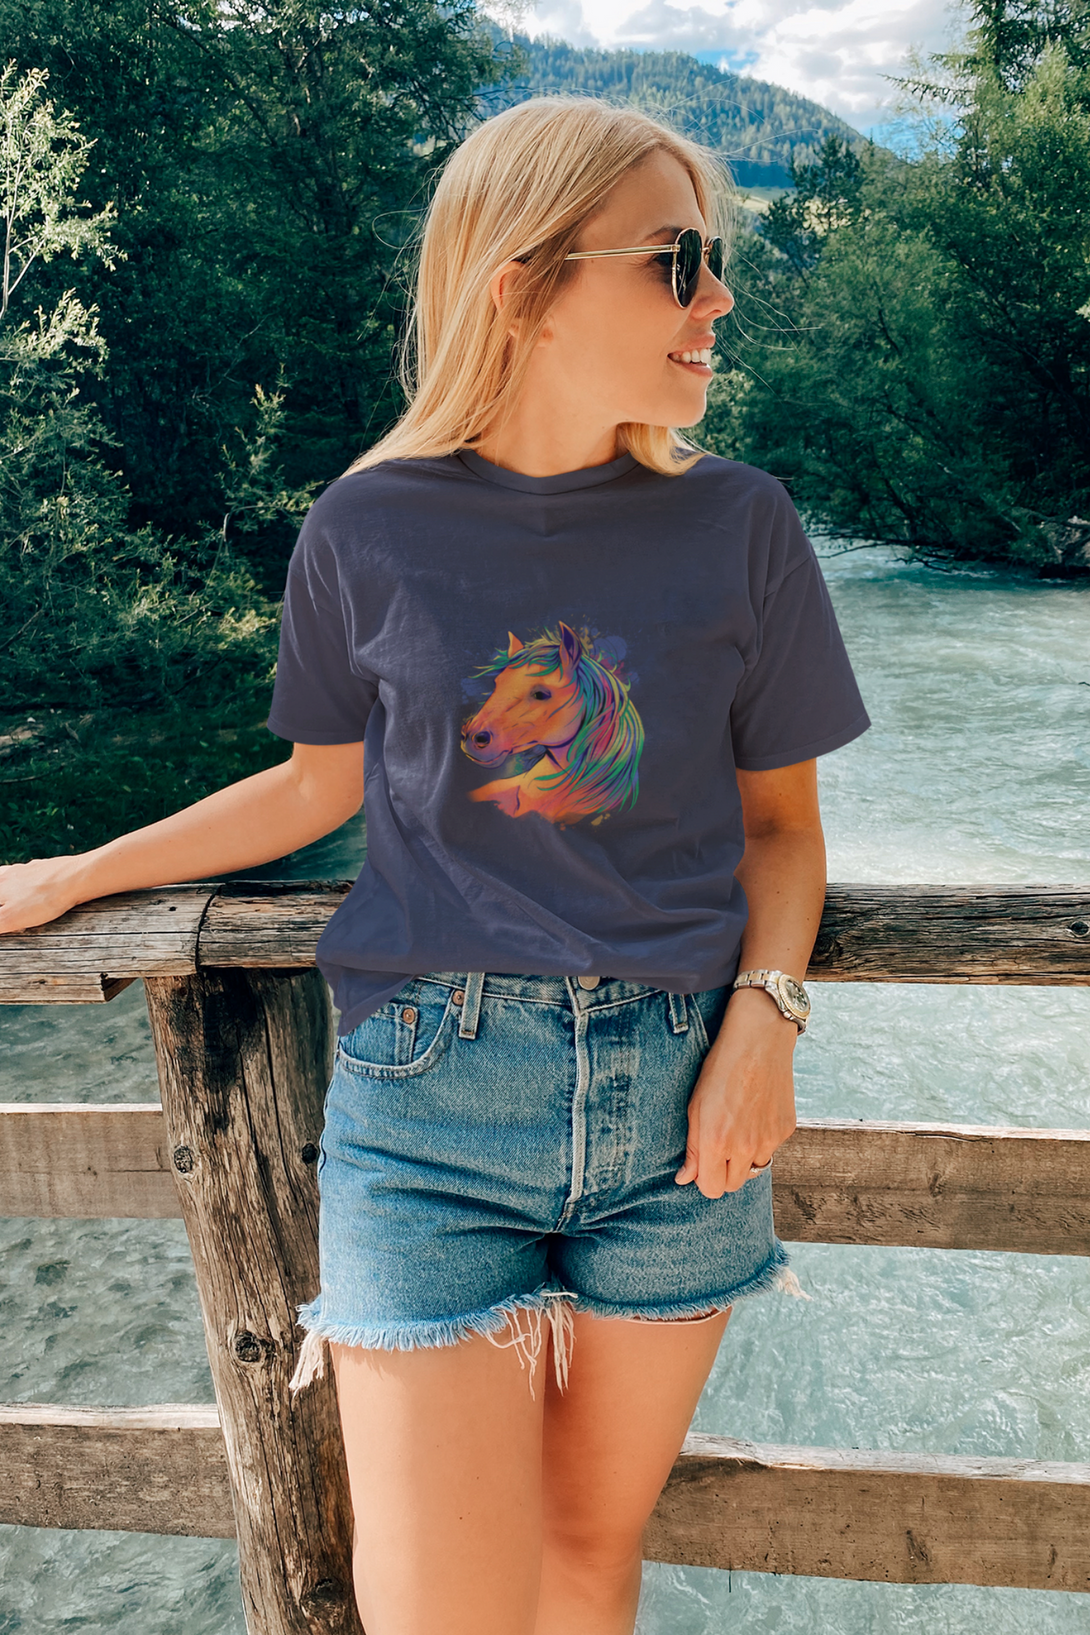 Horse Art Printed T-Shirt For Women - WowWaves - 7